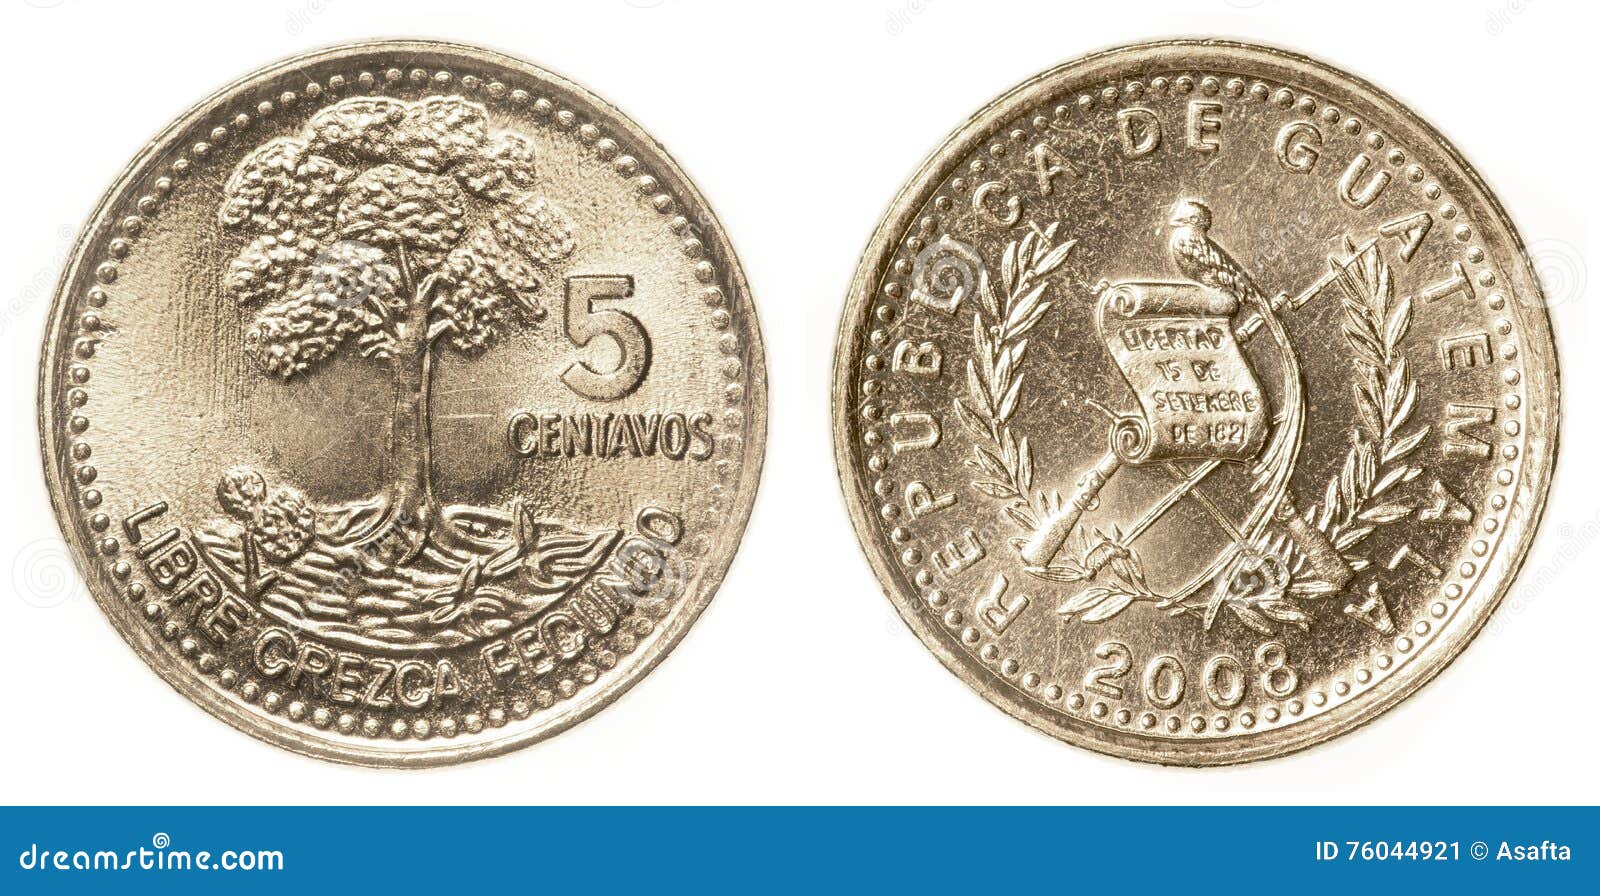 5 guatemalan centavos coin